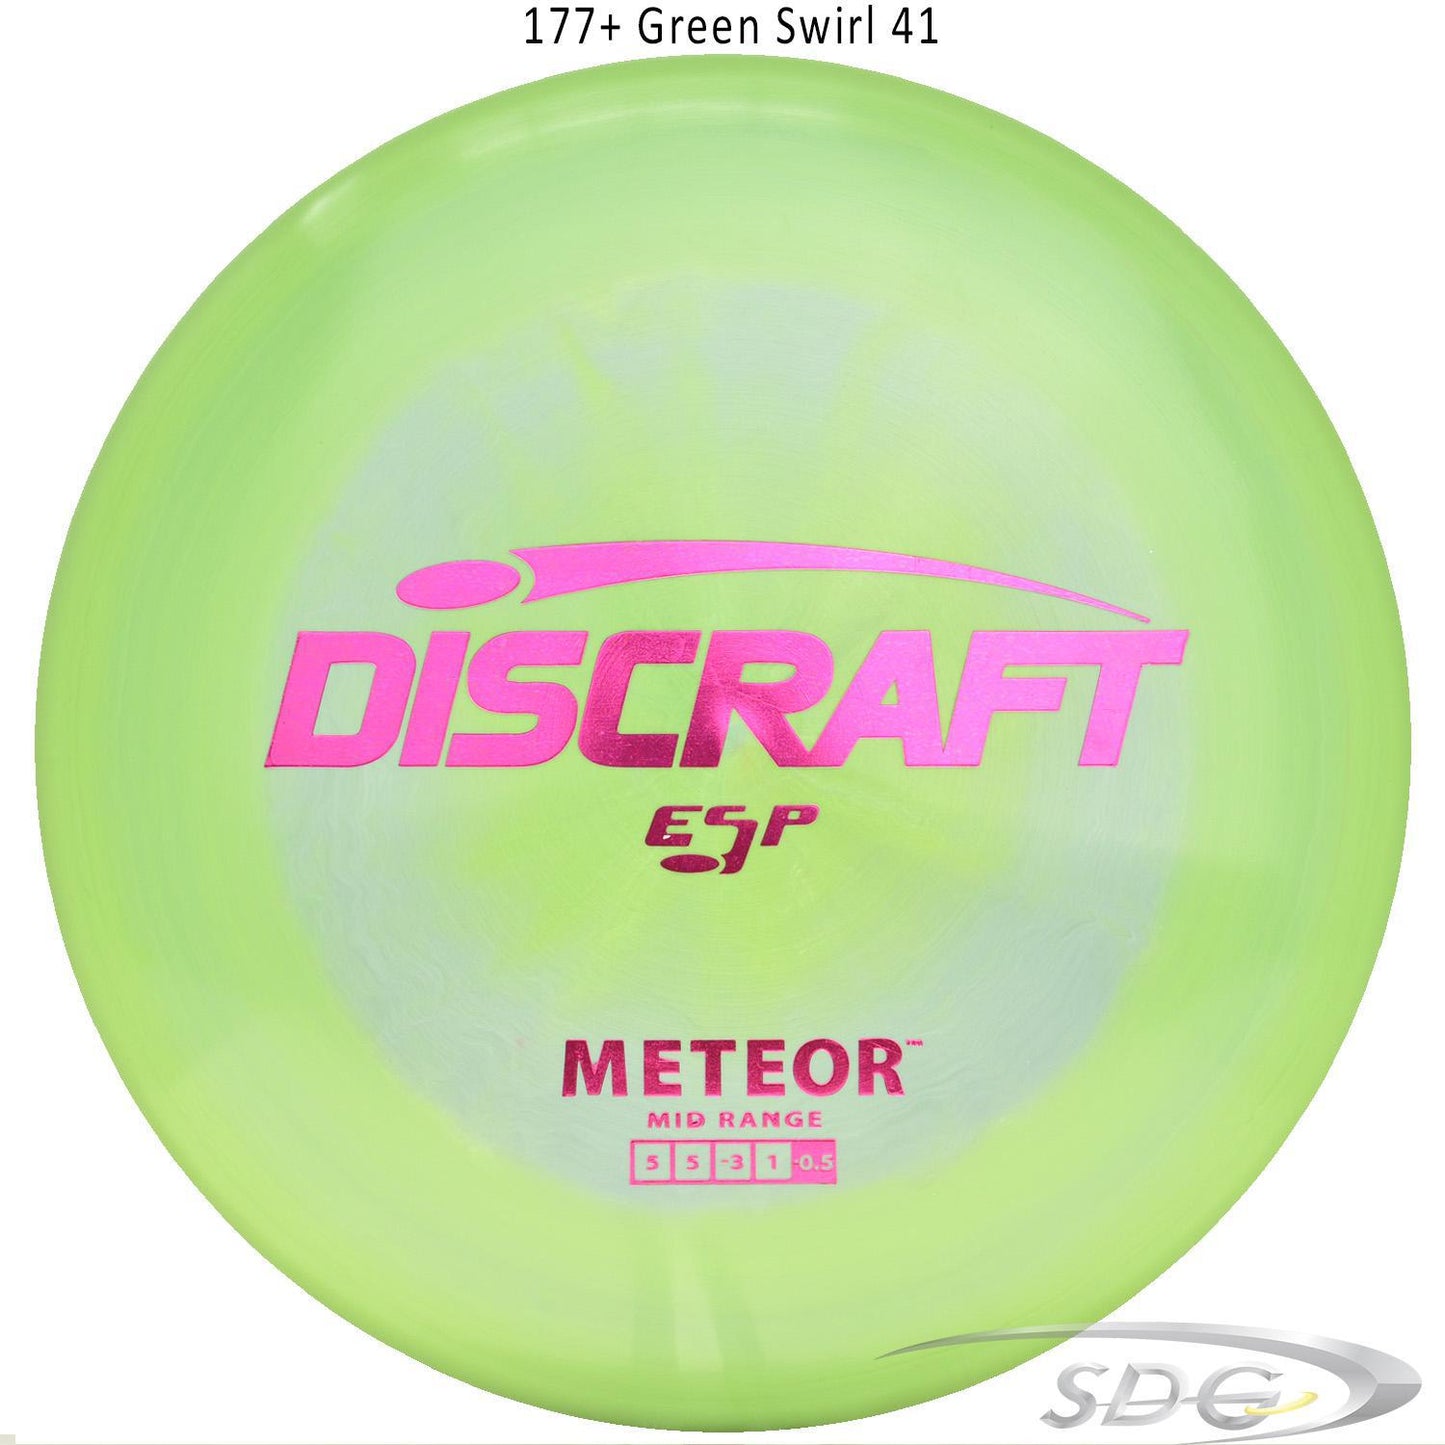 discraft-esp-meteor-disc-golf-mid-range 177+ Green Swirl 41